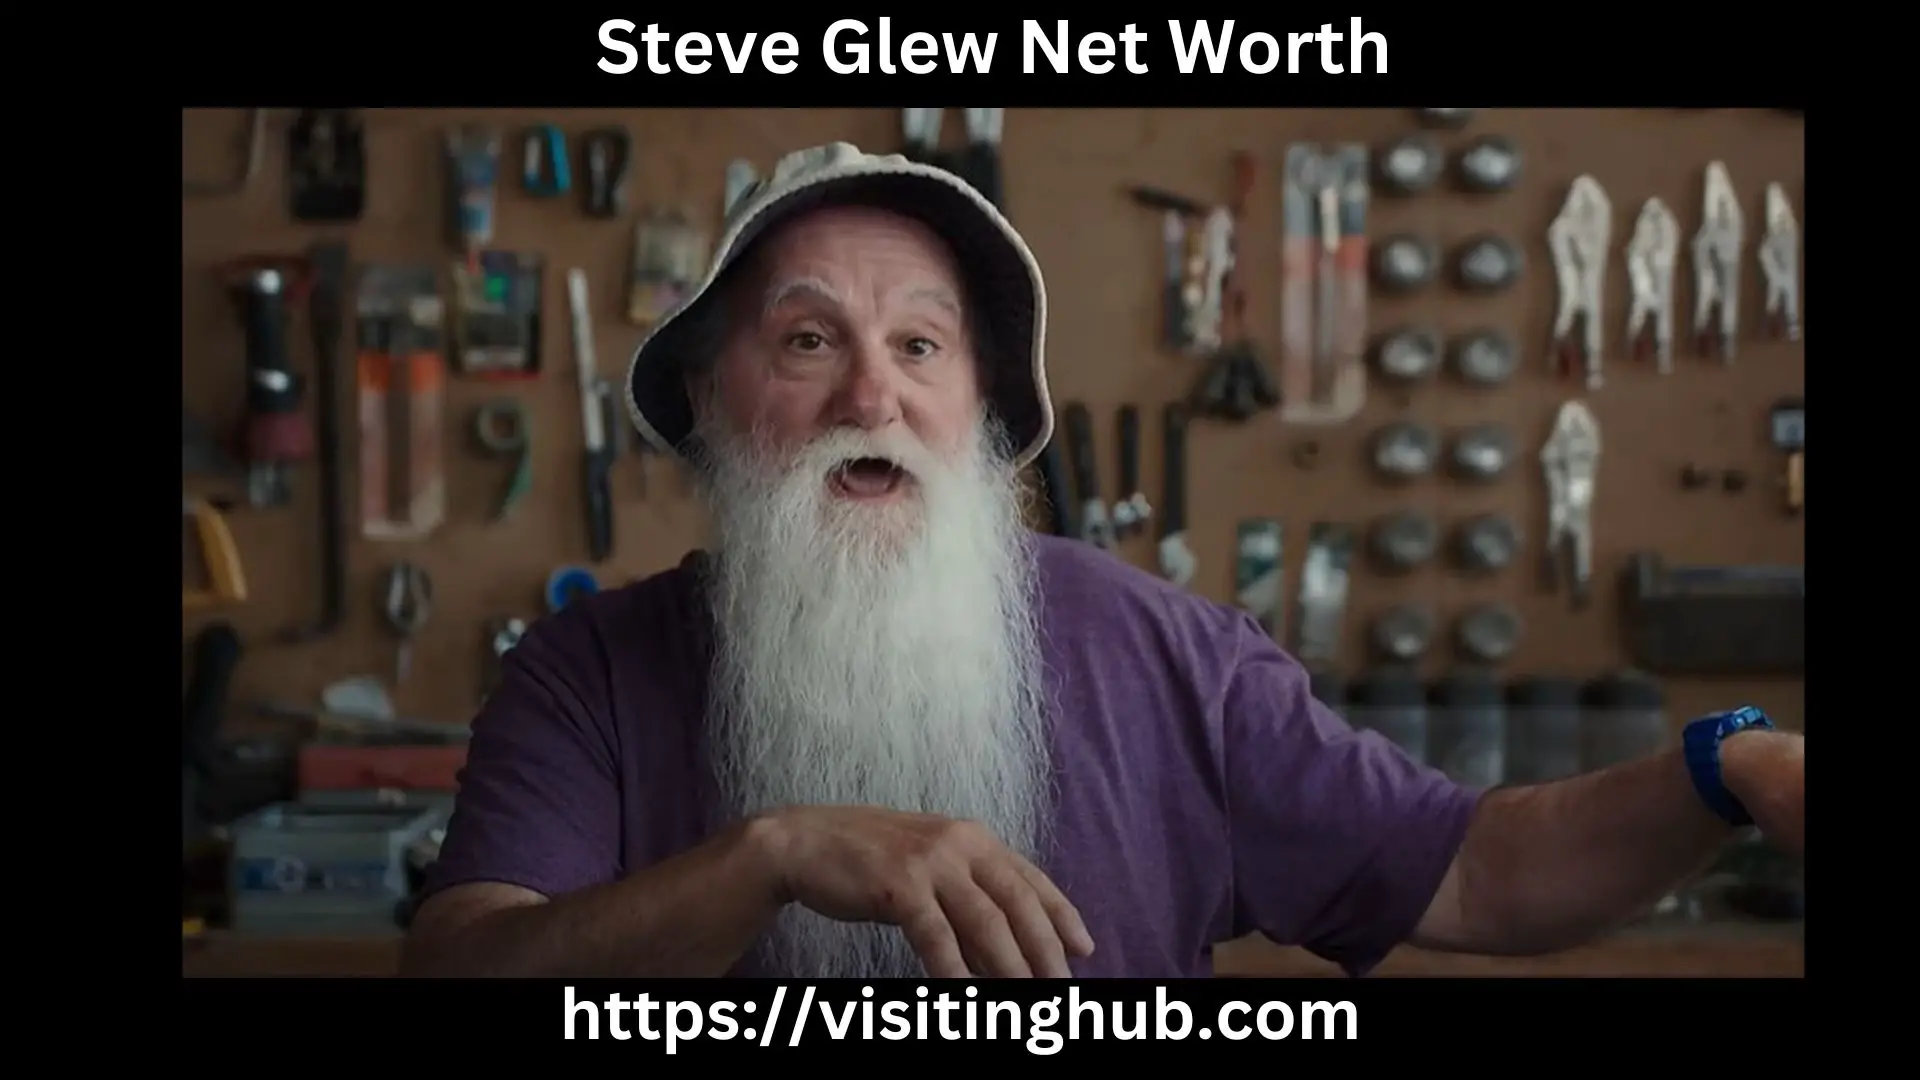 Steve Glew Net Worth